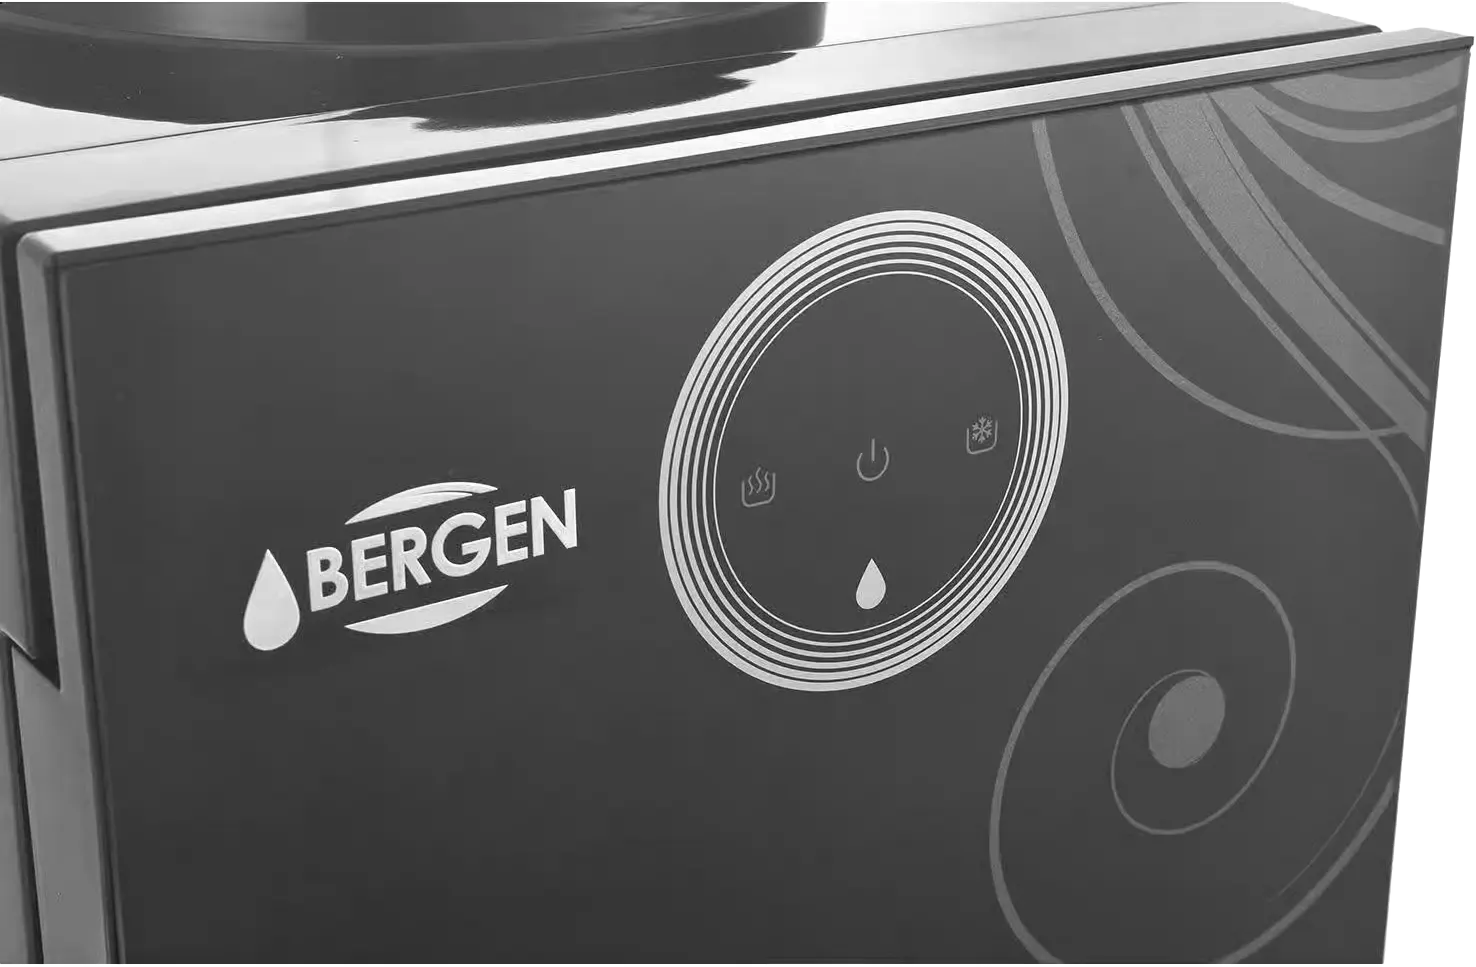 Bergen Water Dispenser, 3 Taps (Cold + Hot + Regular), Top Loading, Refrigerator, Black*Silver, BYB538